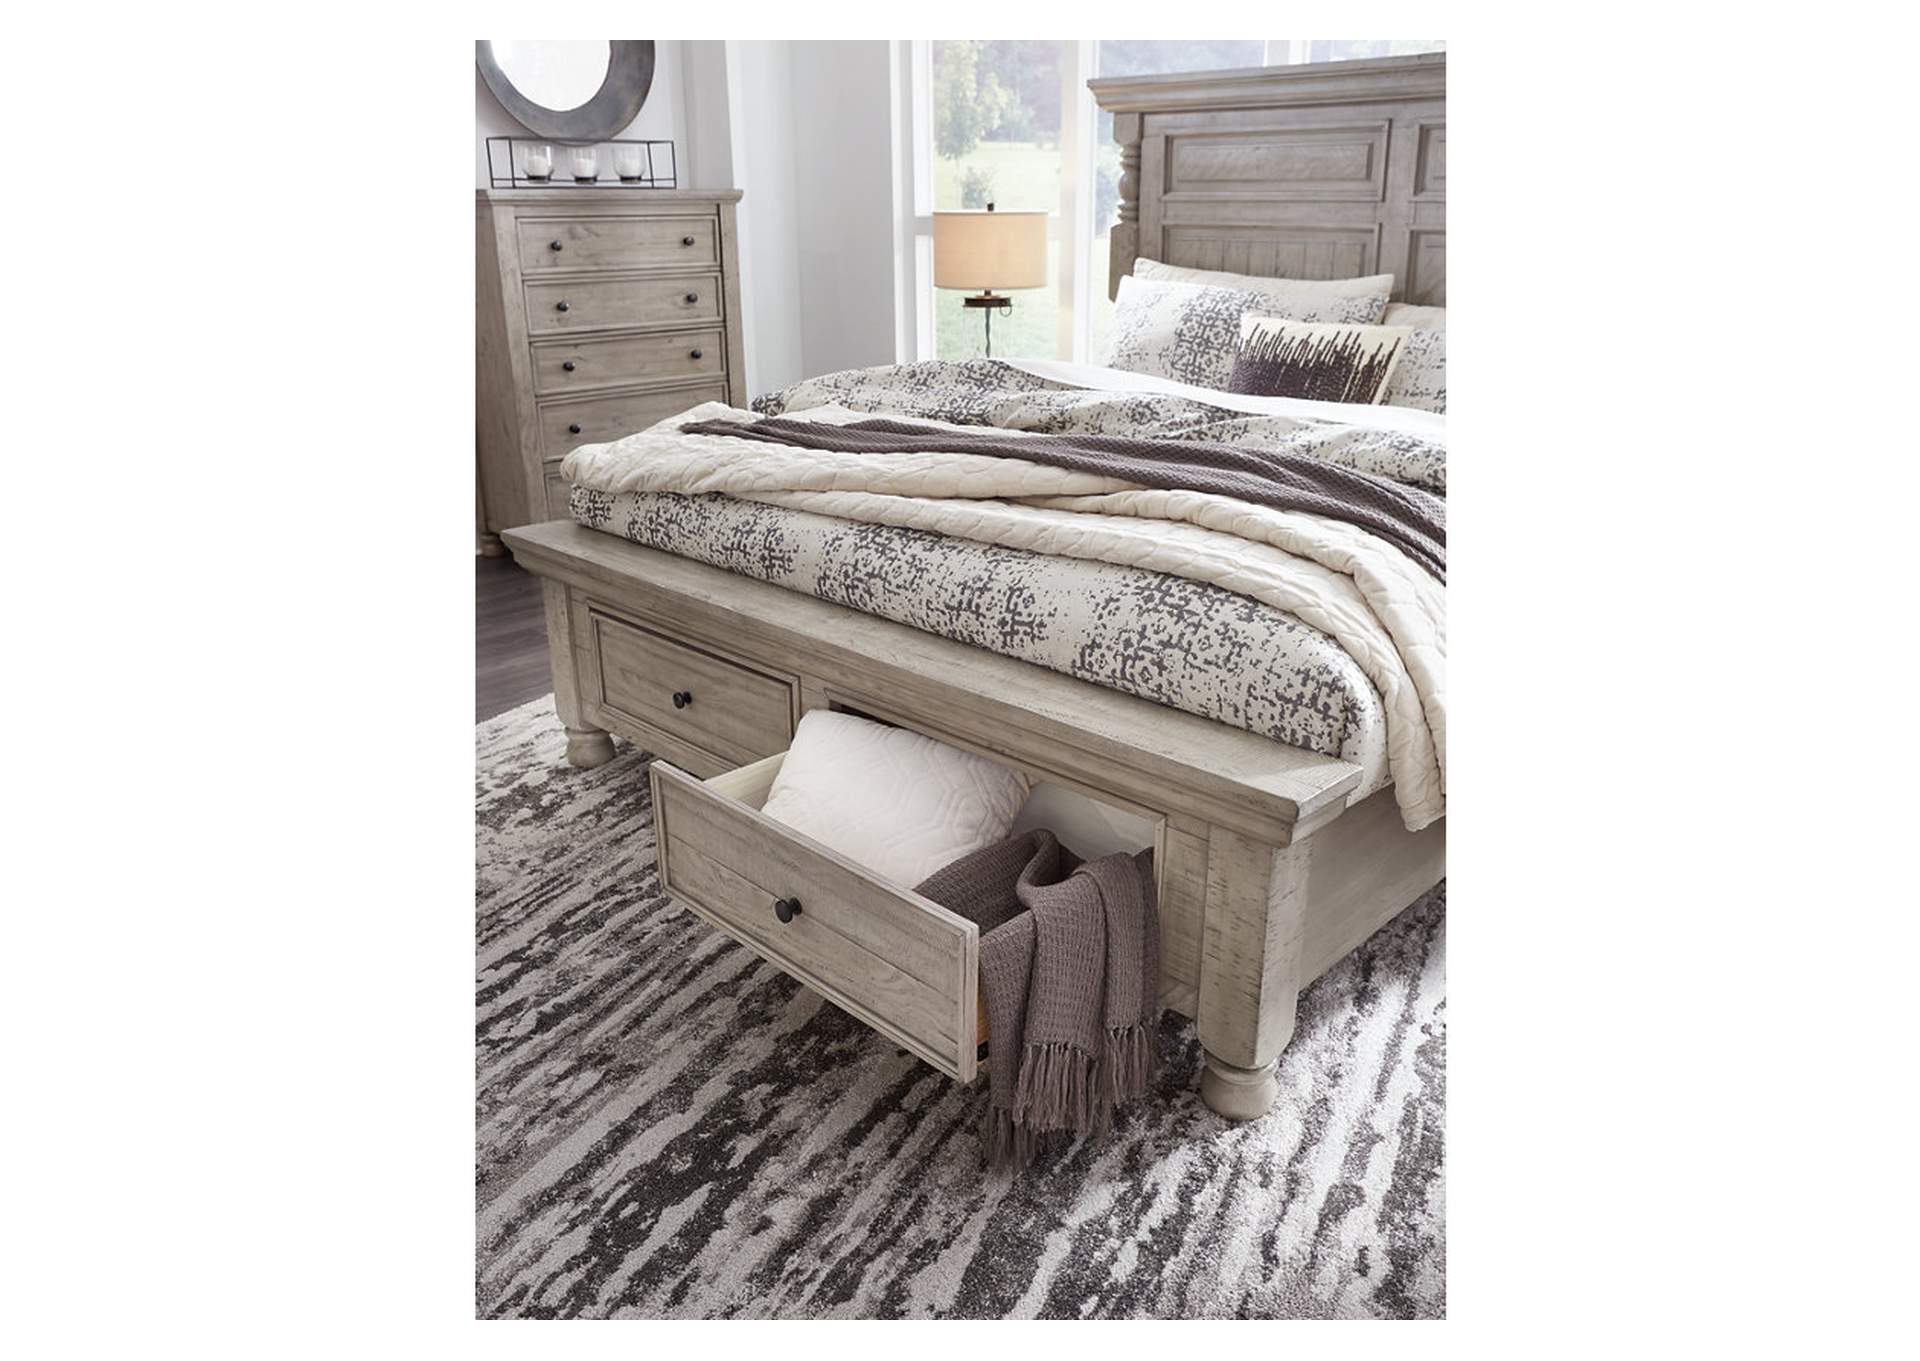 Harrastone California King Panel Bed with Dresser,Millennium